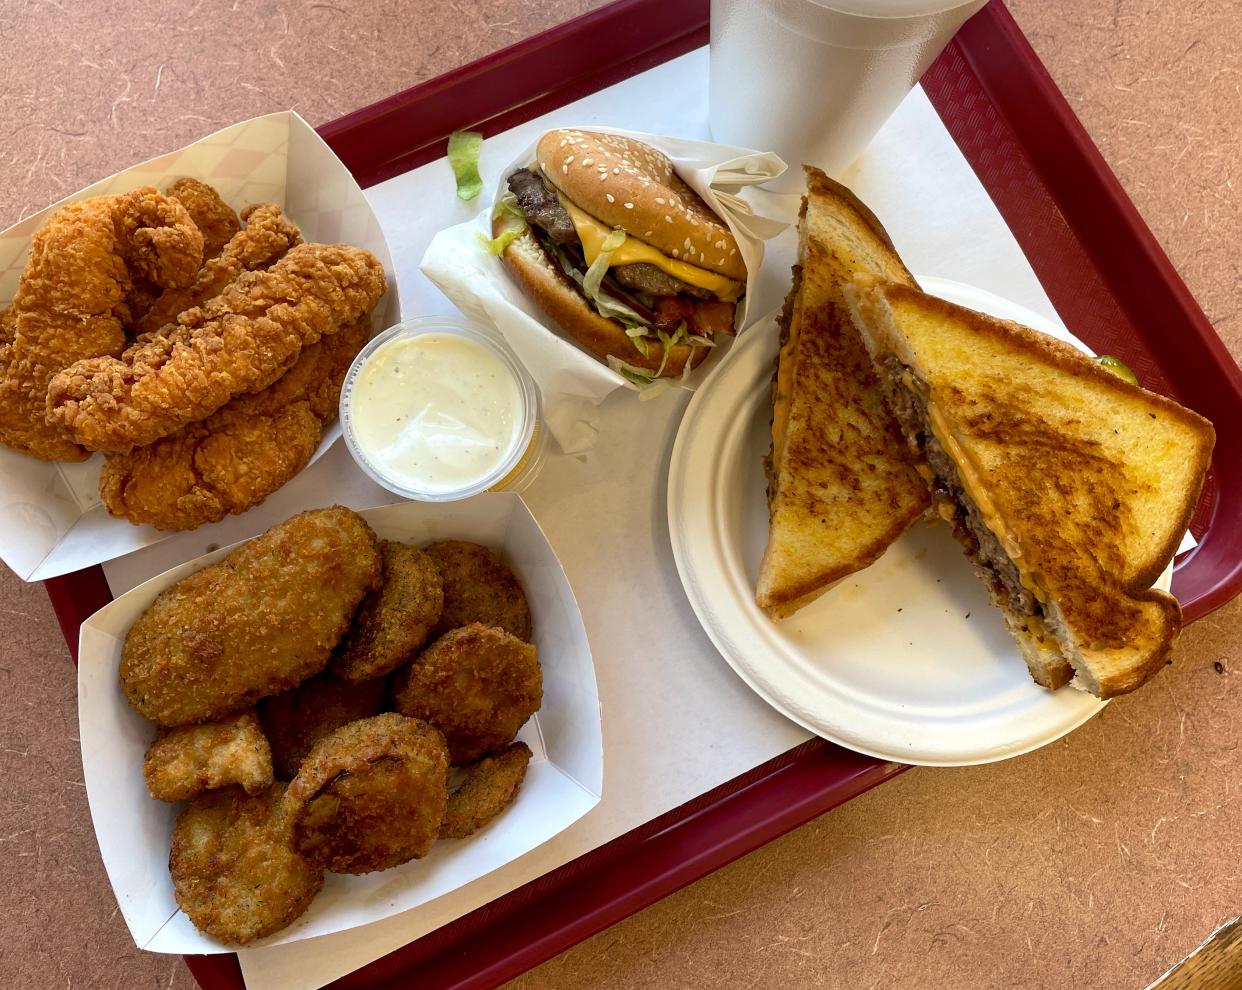 Best Burger offers a menu of gourmet burgers, gourmet sandwiches, sides and milkshakes.